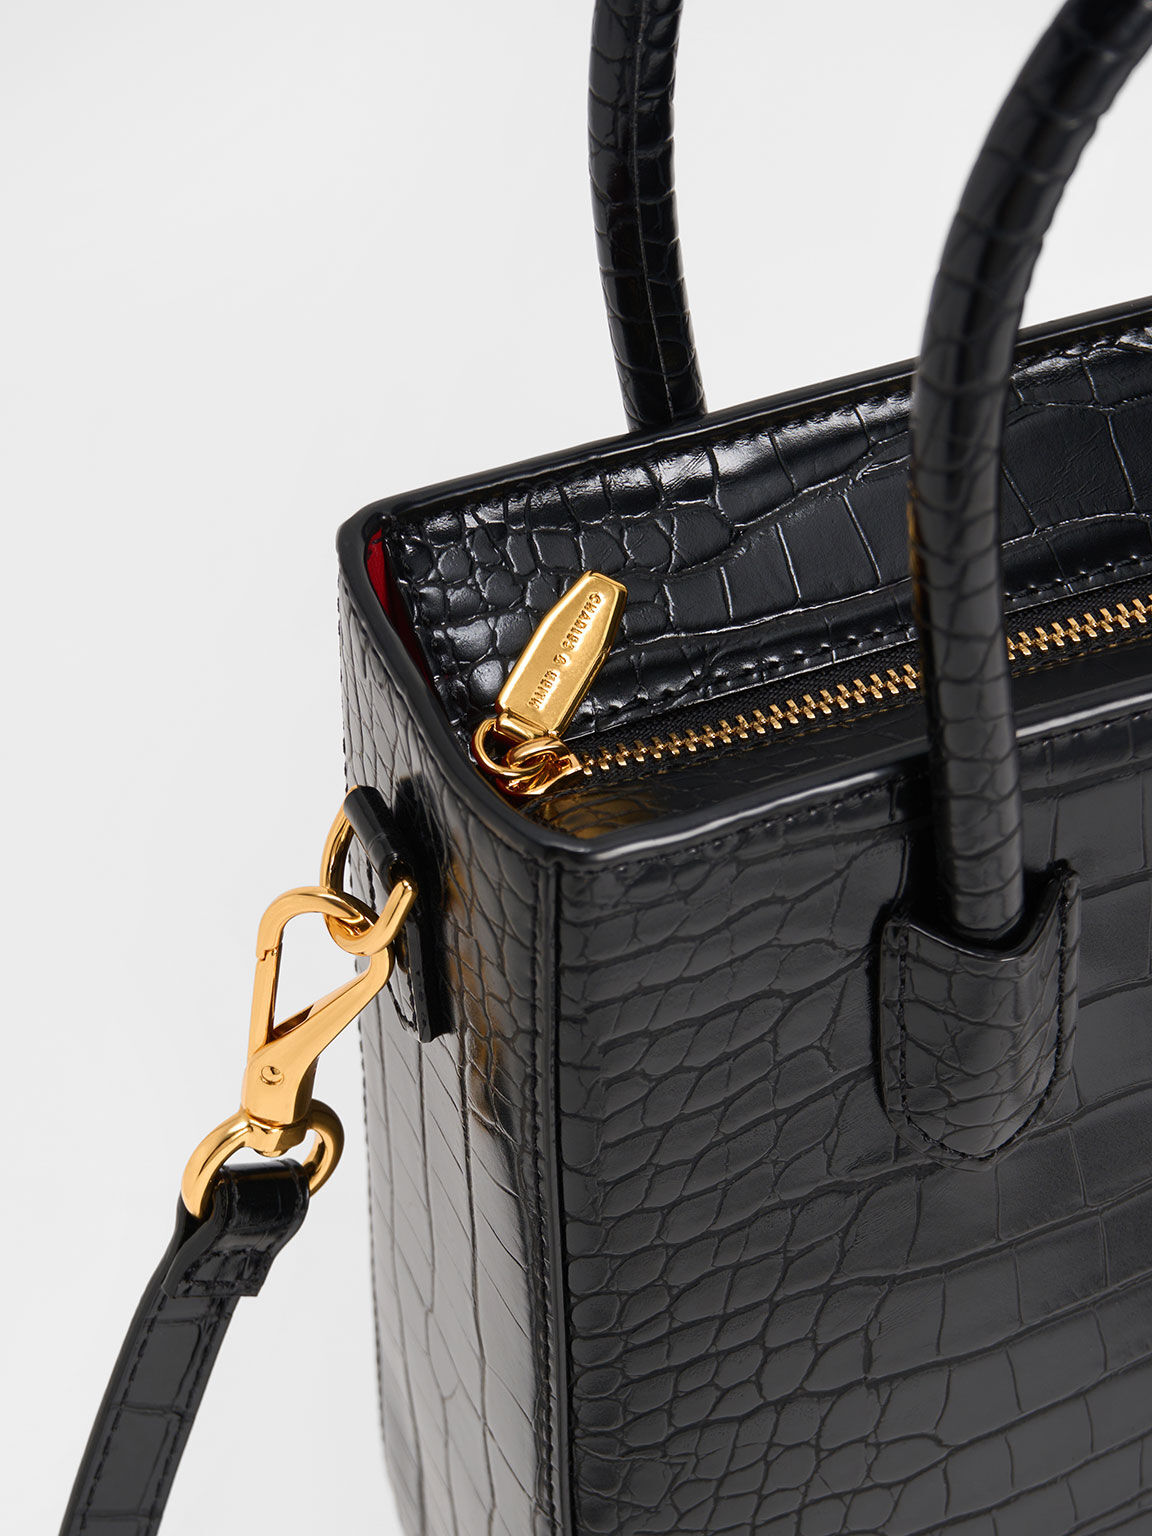 Black Croc Embossed Leather Tote Handbag with JC Emblem